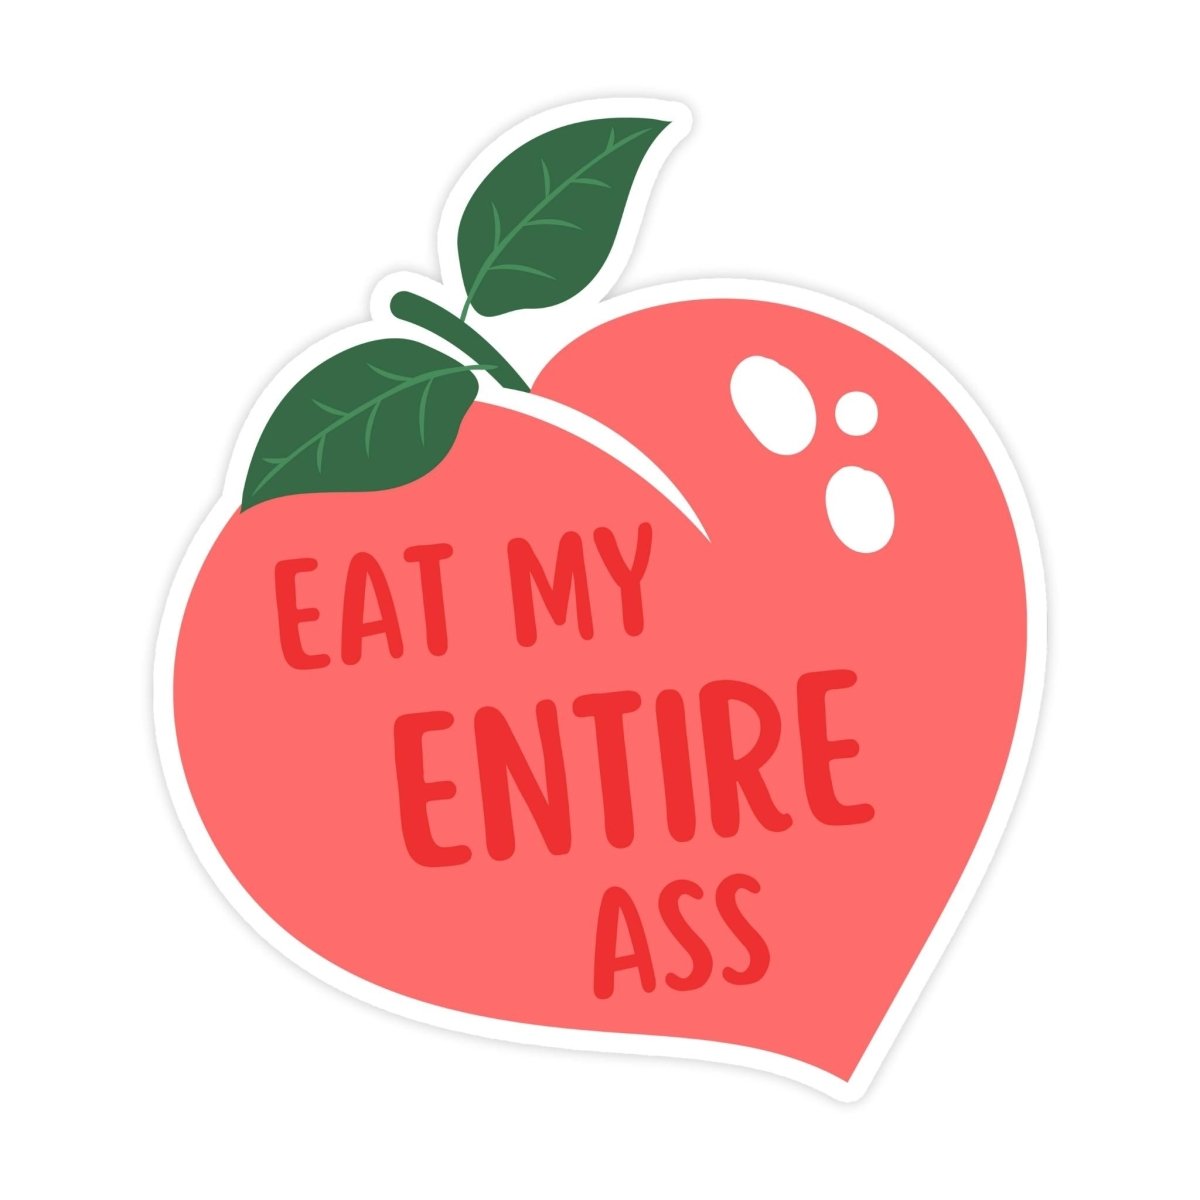 Eat My Entire Ass Sticker Peach Sticker - stickerbullEat My Entire Ass Sticker Peach StickerRetail StickerstickerbullstickerbullSage_PeachEatAss [#144]Eat My Entire Ass Sticker Peach Sticker